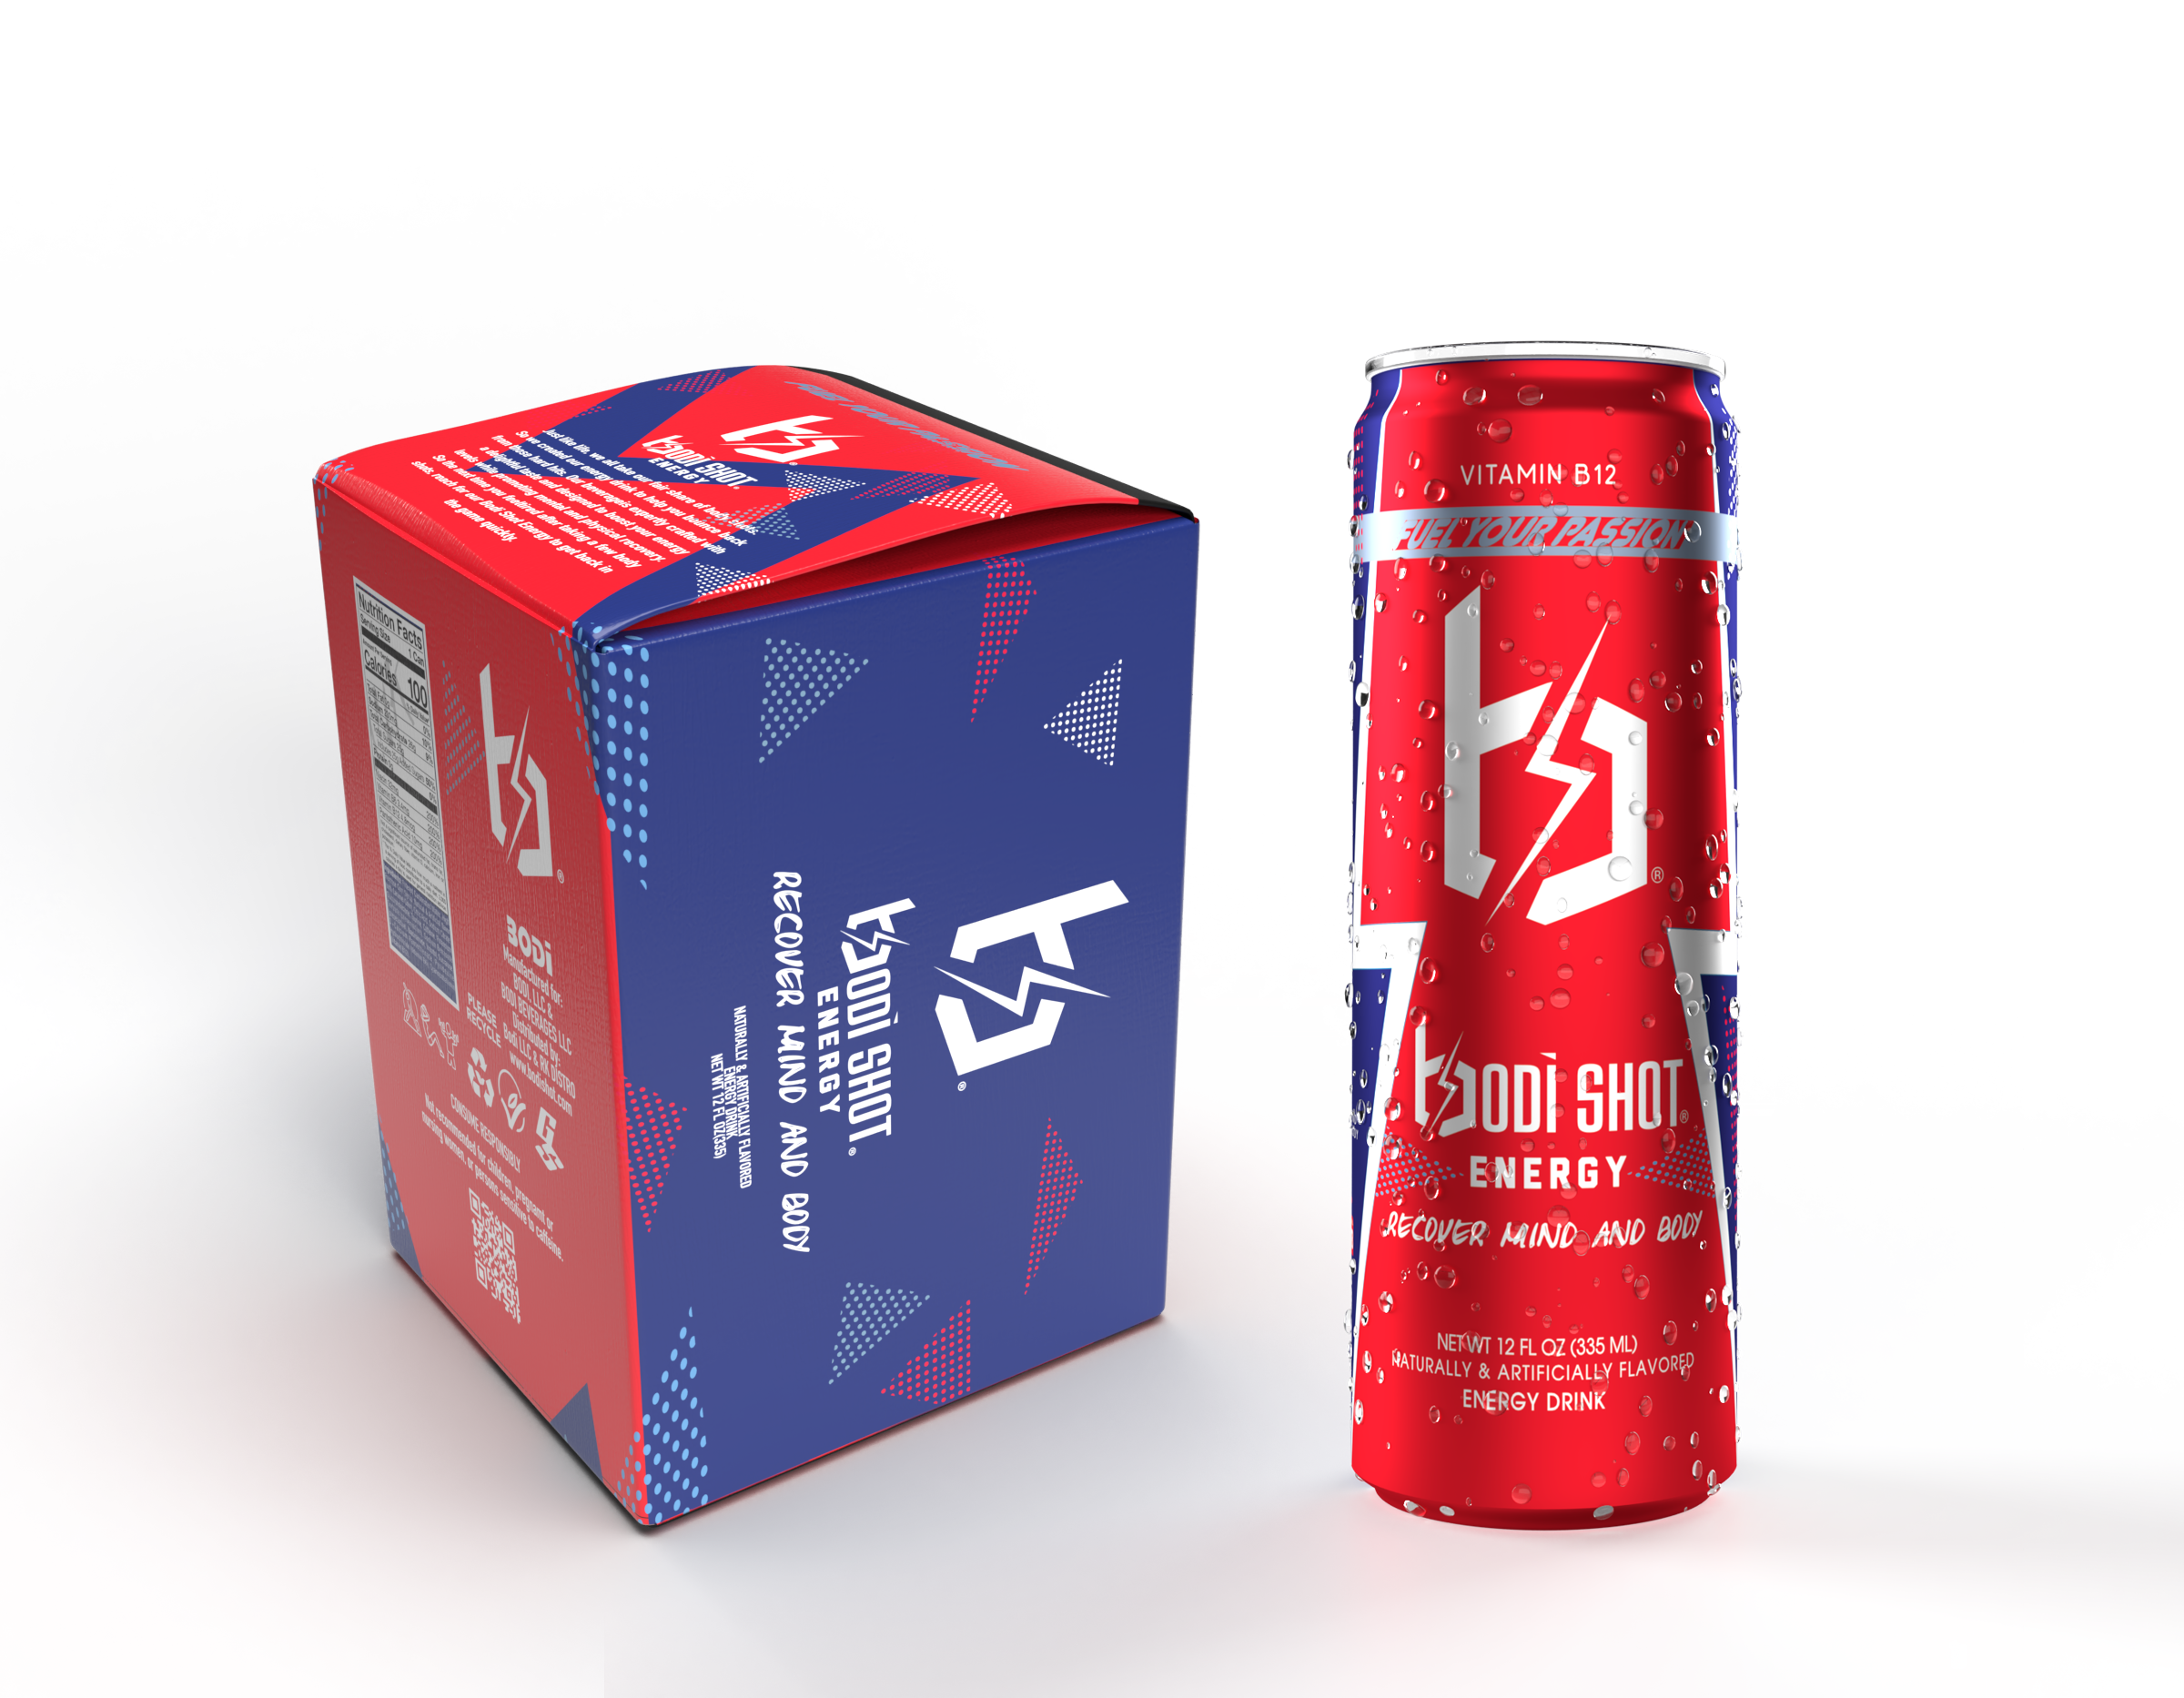 Bodi Shot Box Design 4 red flavors